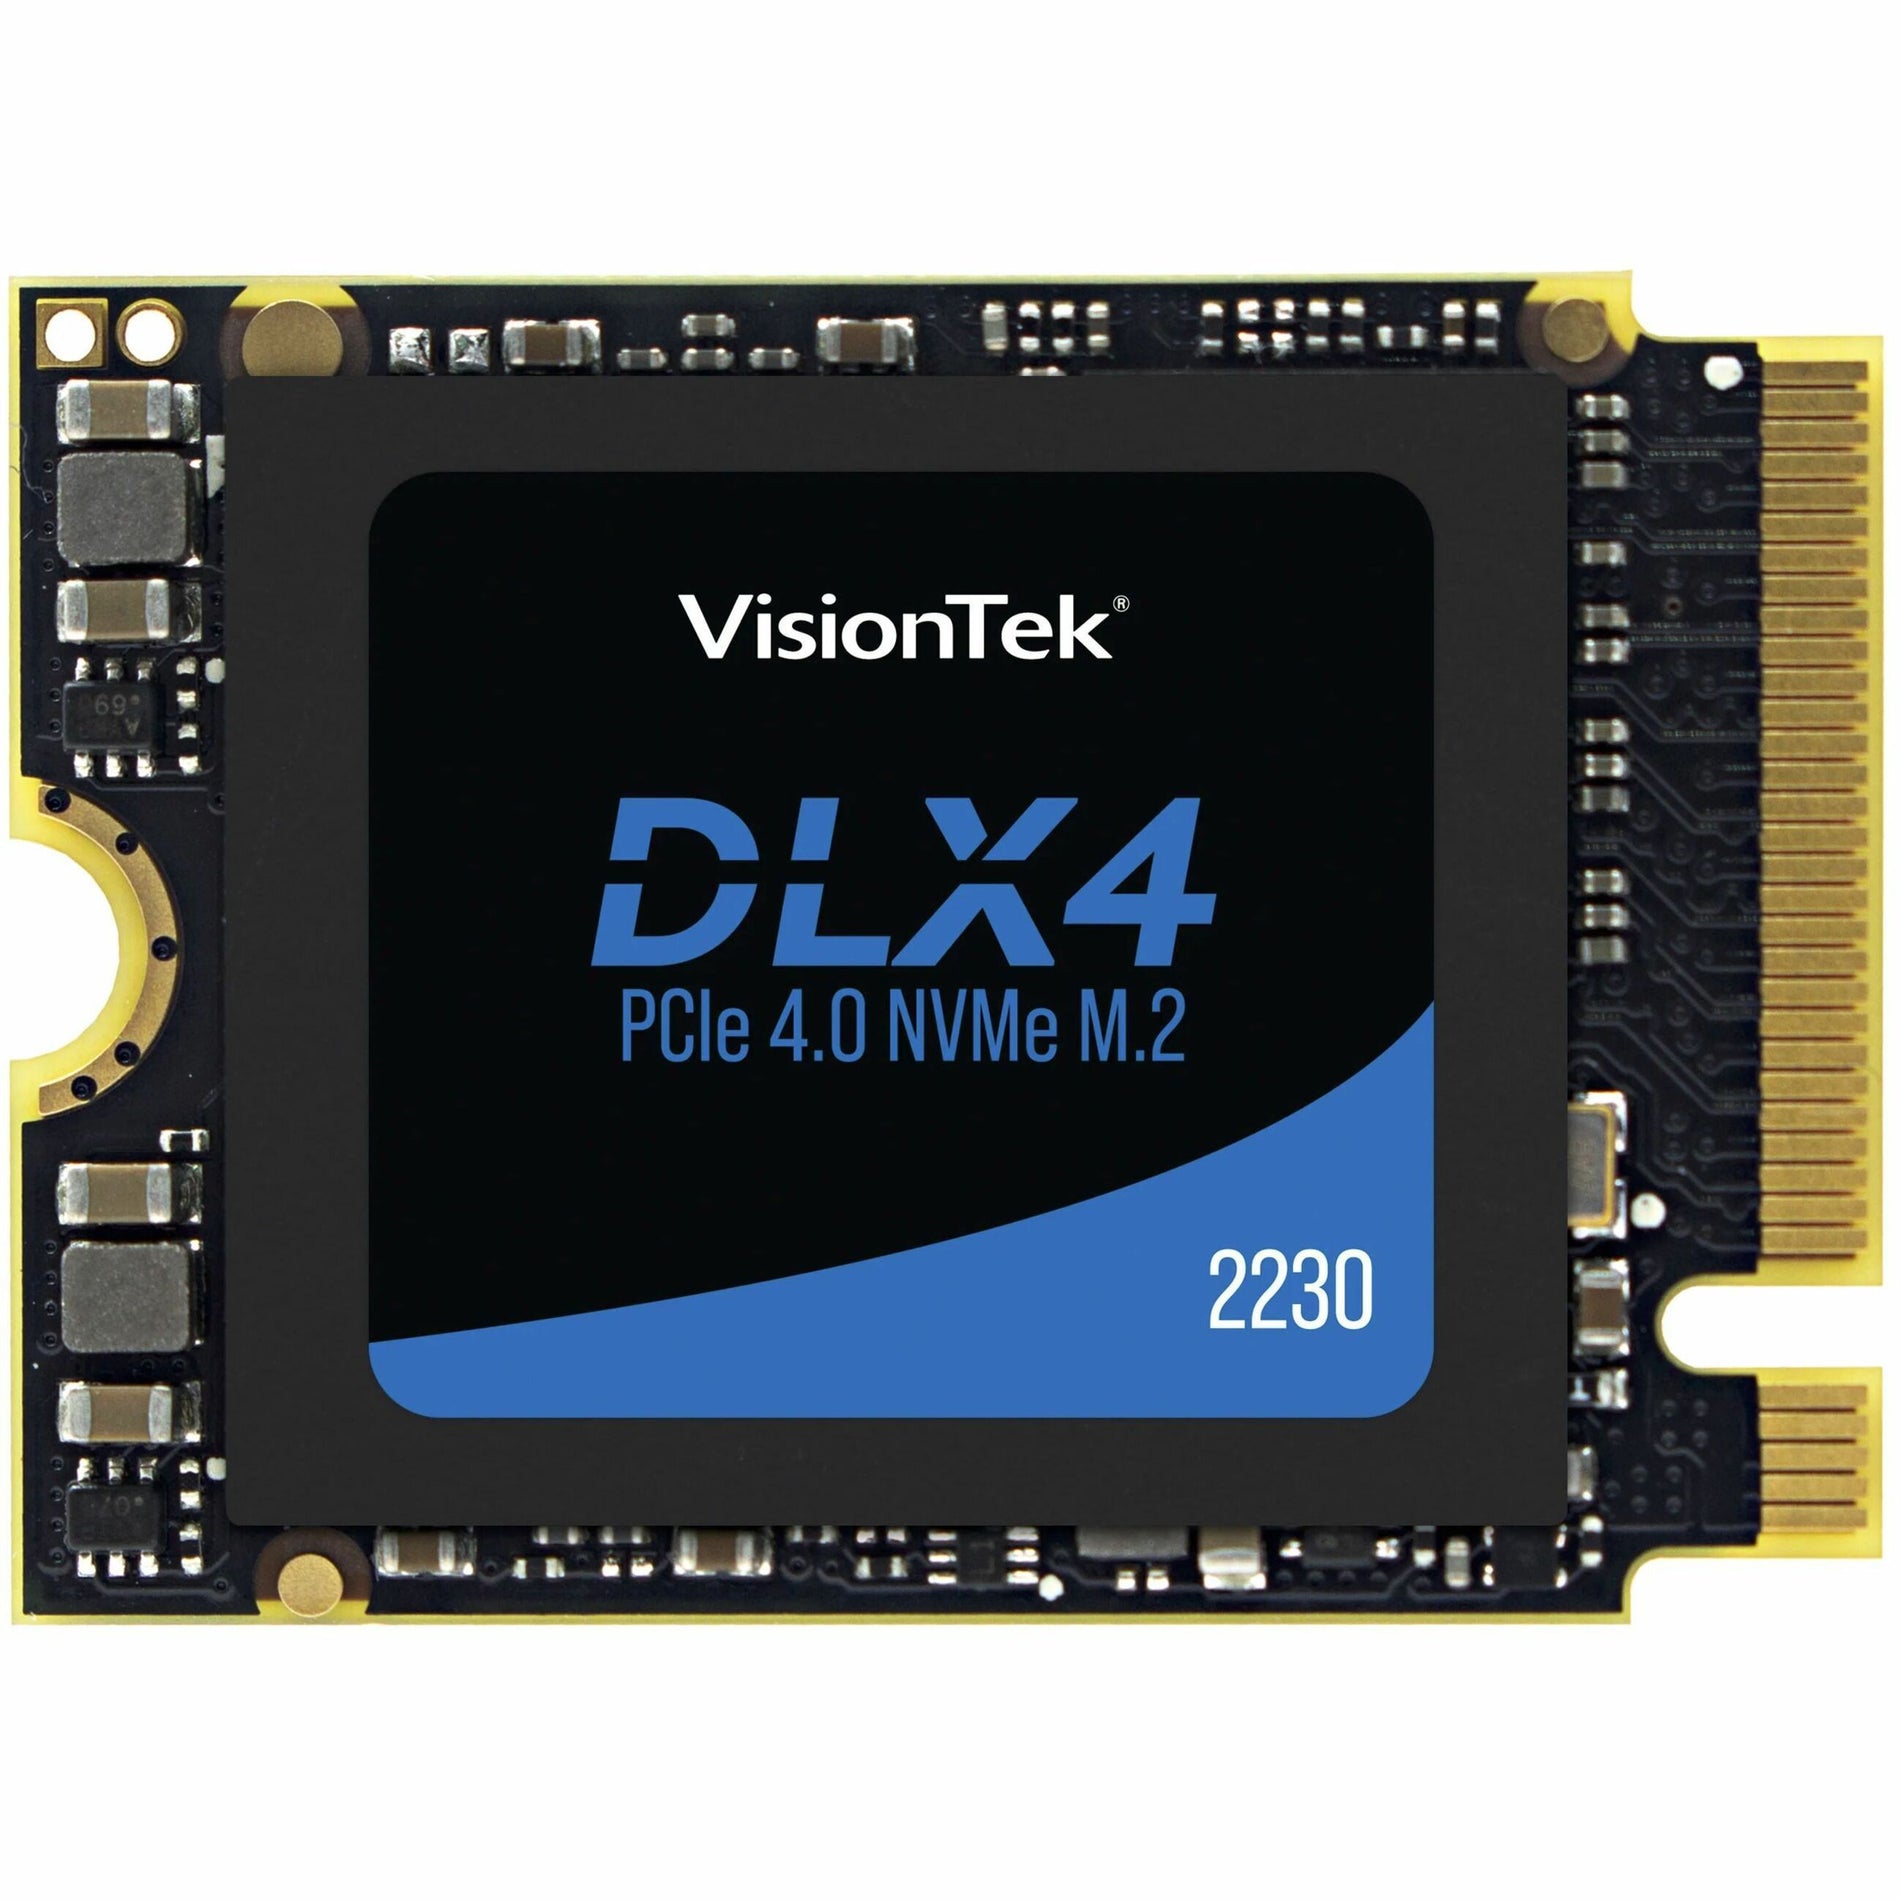 VisionTek 901558 DLX4 2230 M.2 PCIe 4.0 x4 SSD (NVMe), 512GB Storage Capacity, 256-bit AES Encryption